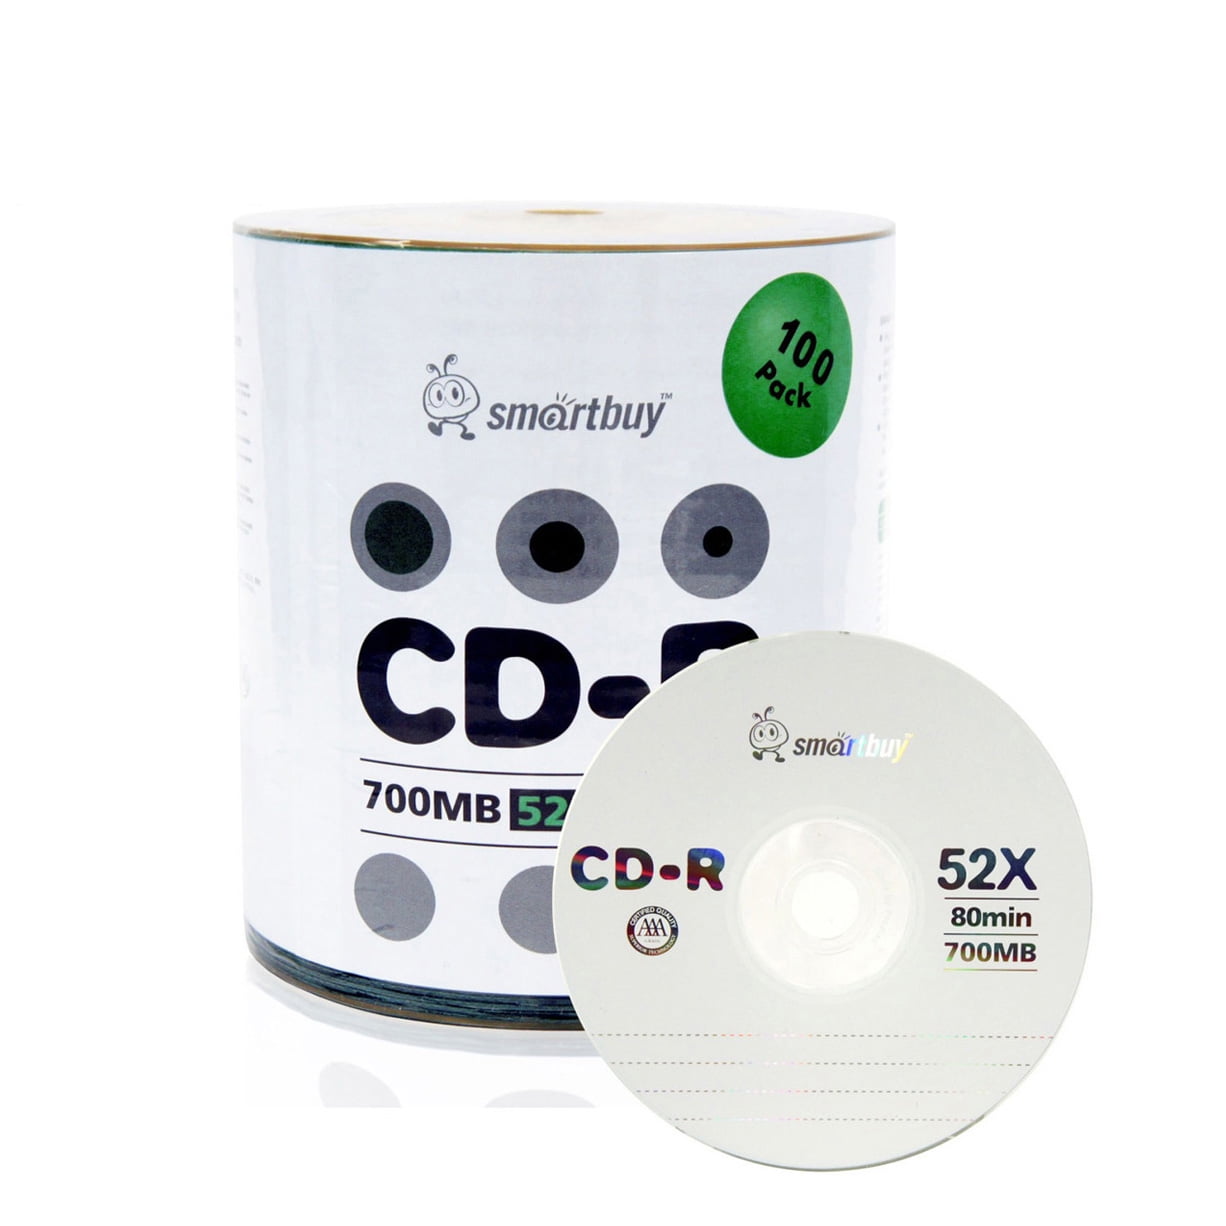 New 100 PCS Of 52X CD-R Blank Media Discs White Top 700MB/80min 